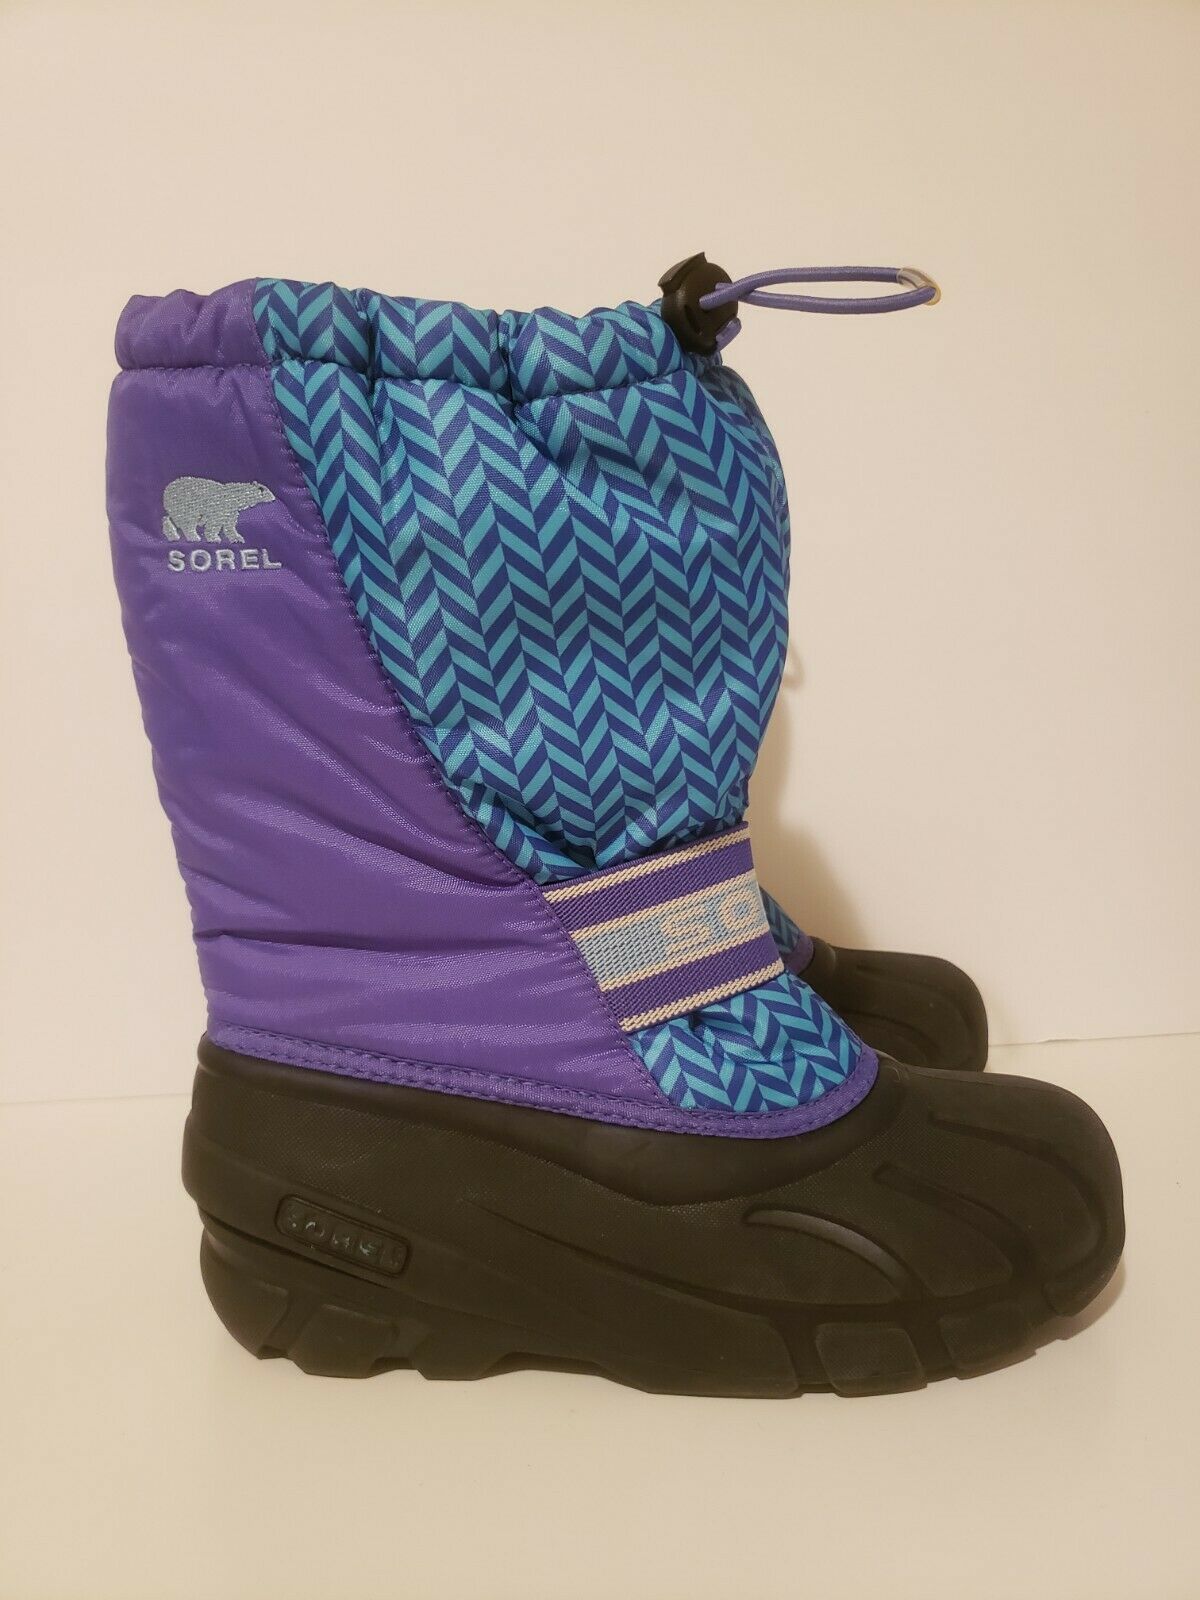 Sorel Youth Girls Size 5 Waterproof Insulated Warm Winter Boots Blue Purple